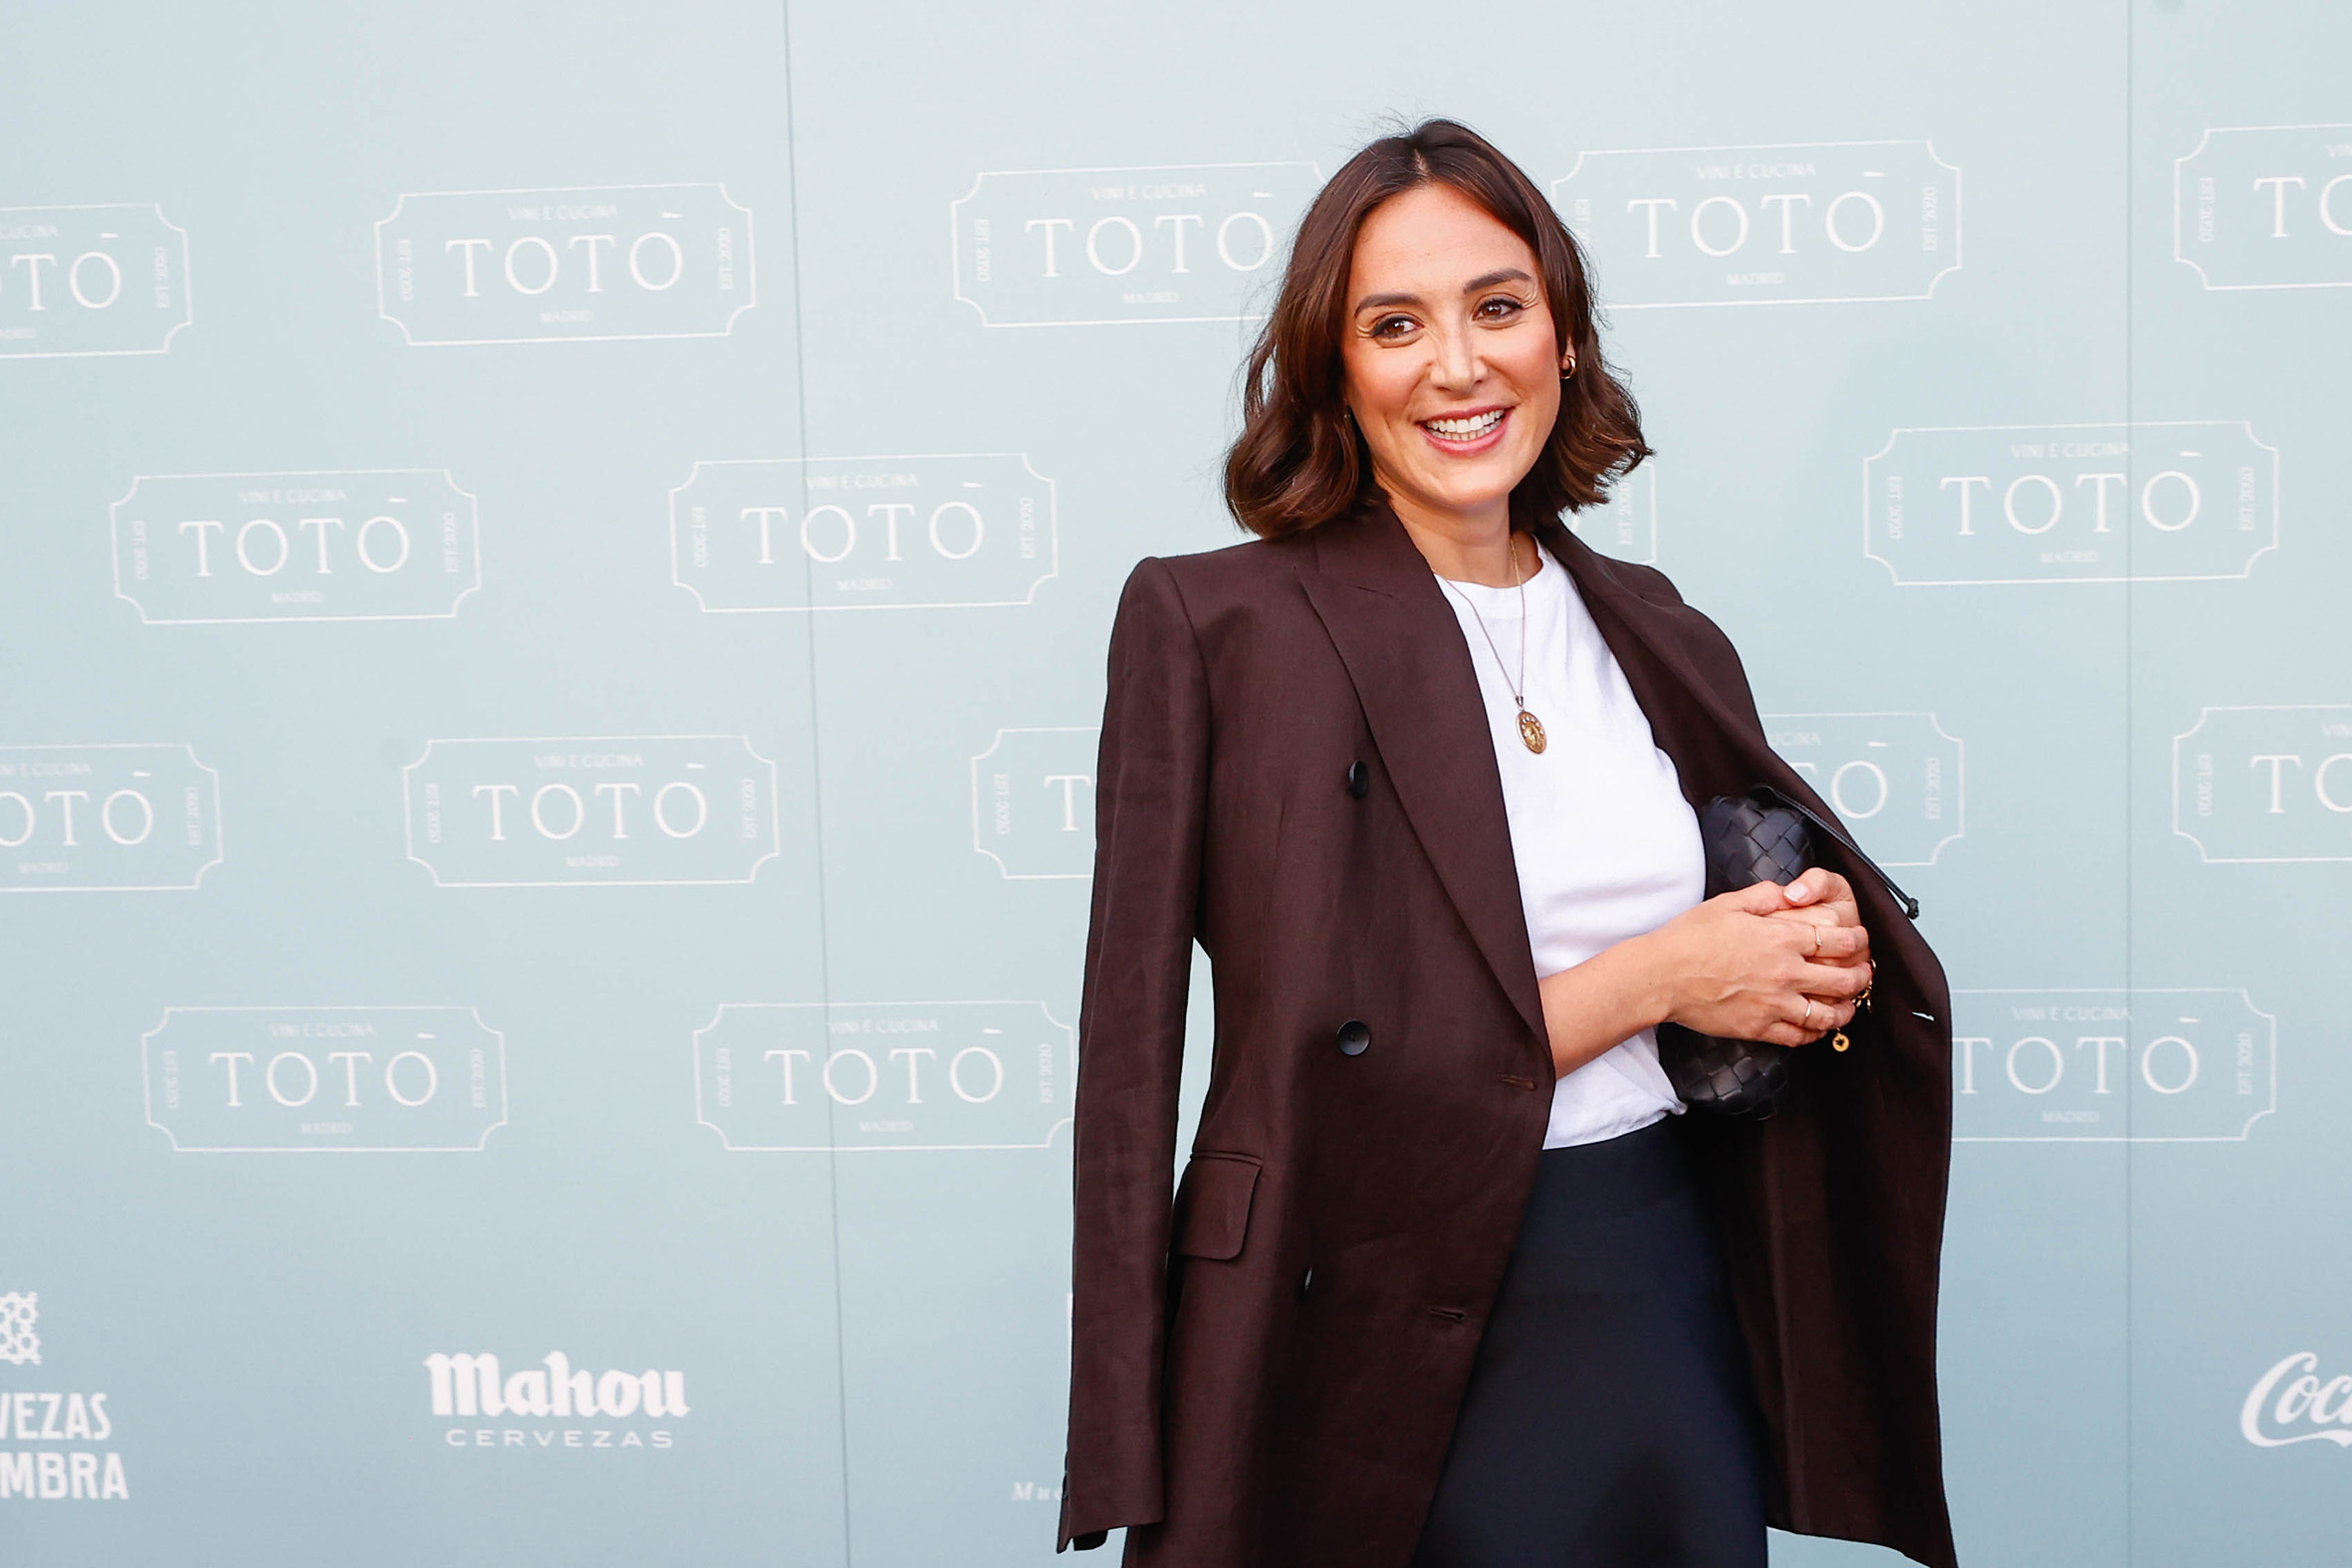 Tamara Falc, en la inauguracin de 'Toto' en Madrid.